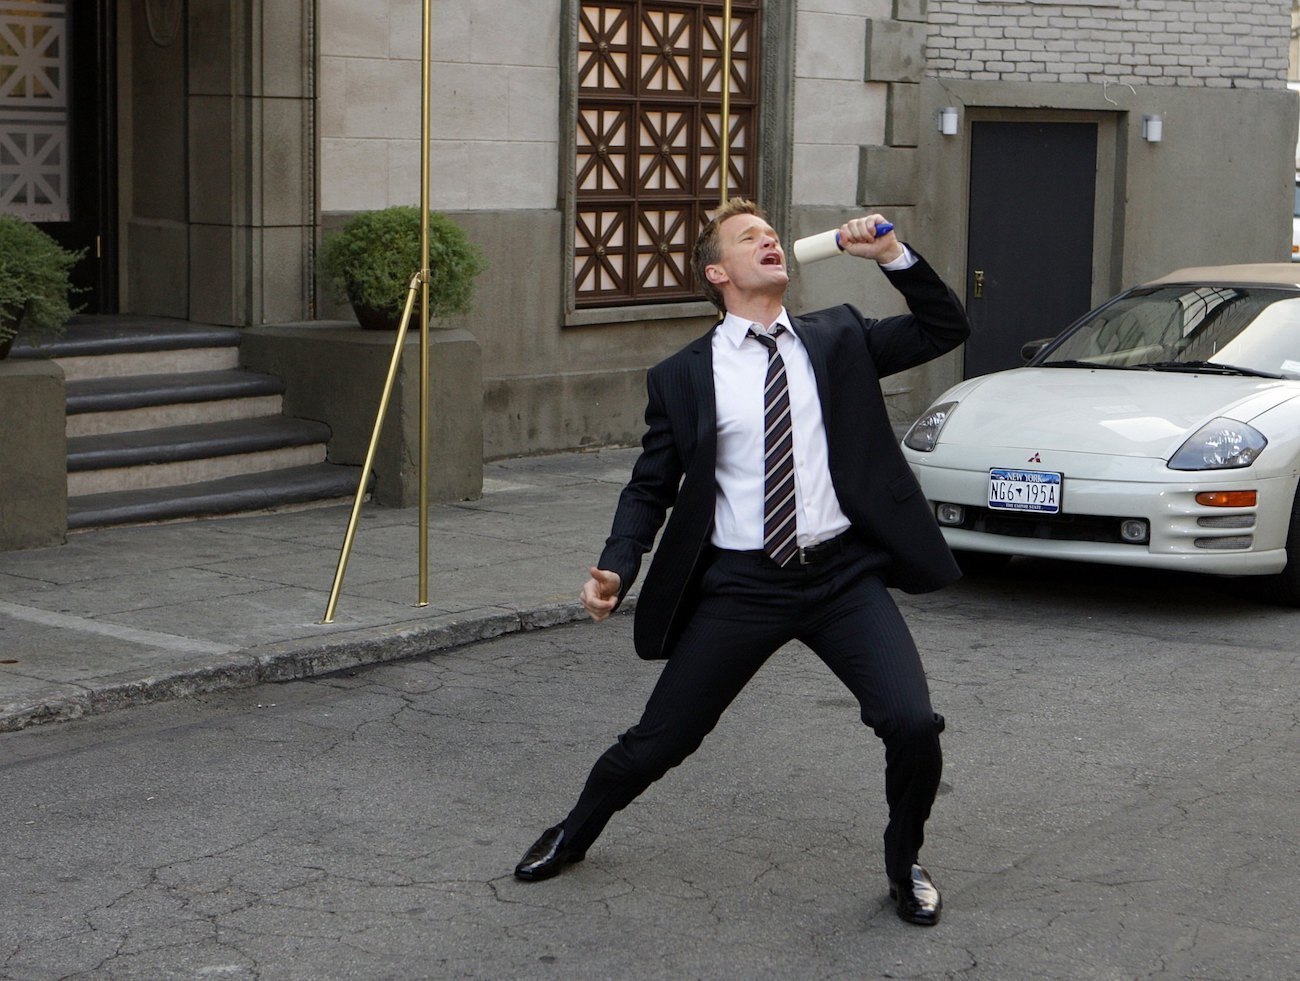 Neil Patrick Harris as Barney Stinson, singing in the street